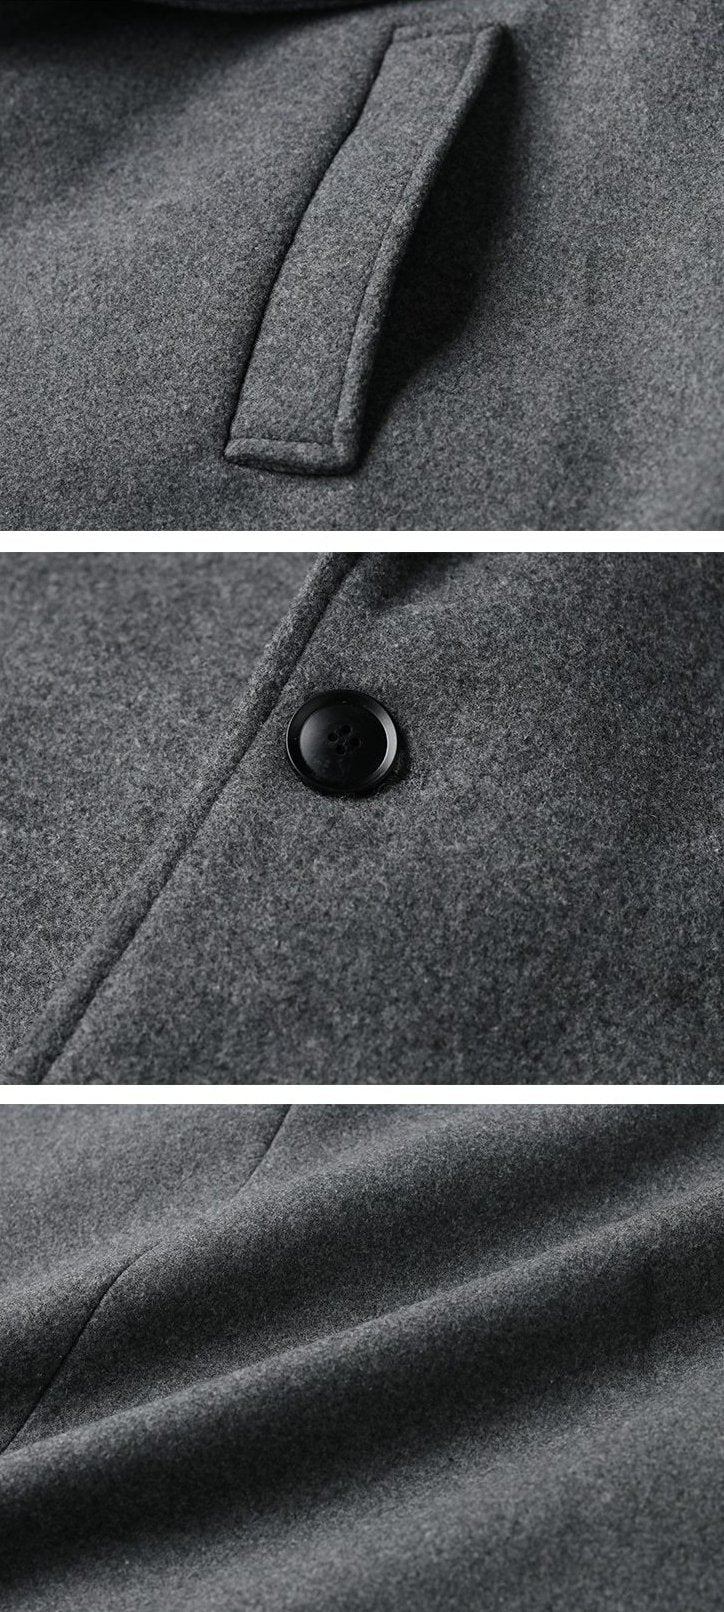 [Korean Style] Josh Loose Woolen Coat